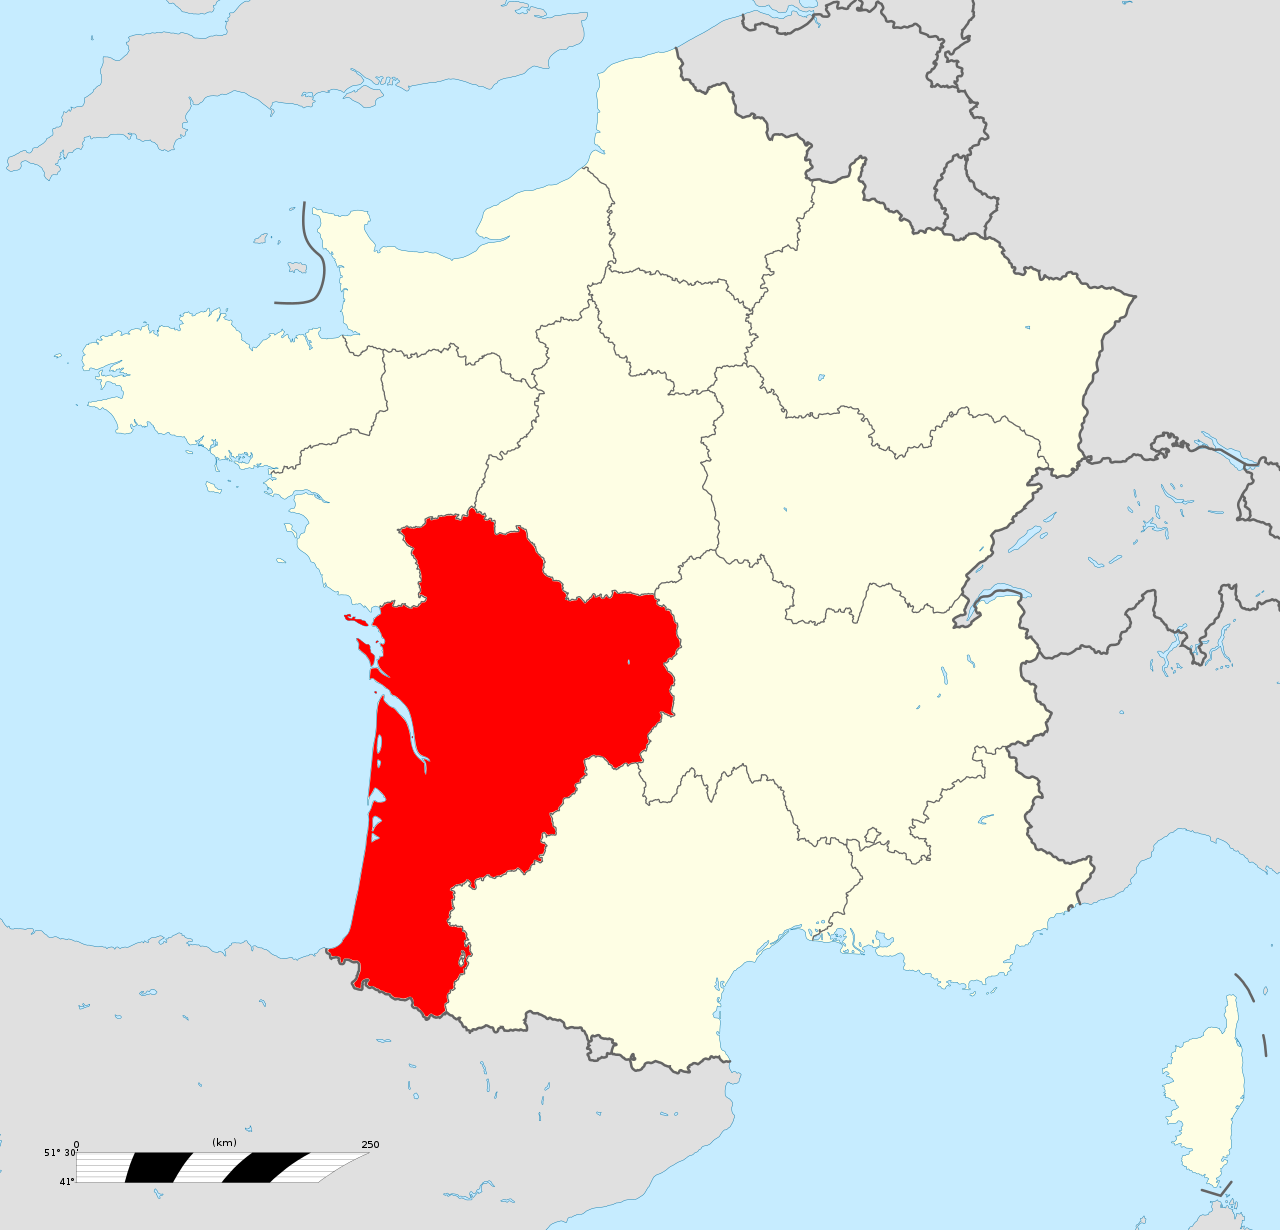 Bel Sito Villa Urbex location or around the region Nouvelle-Aquitaine (Gironde), France